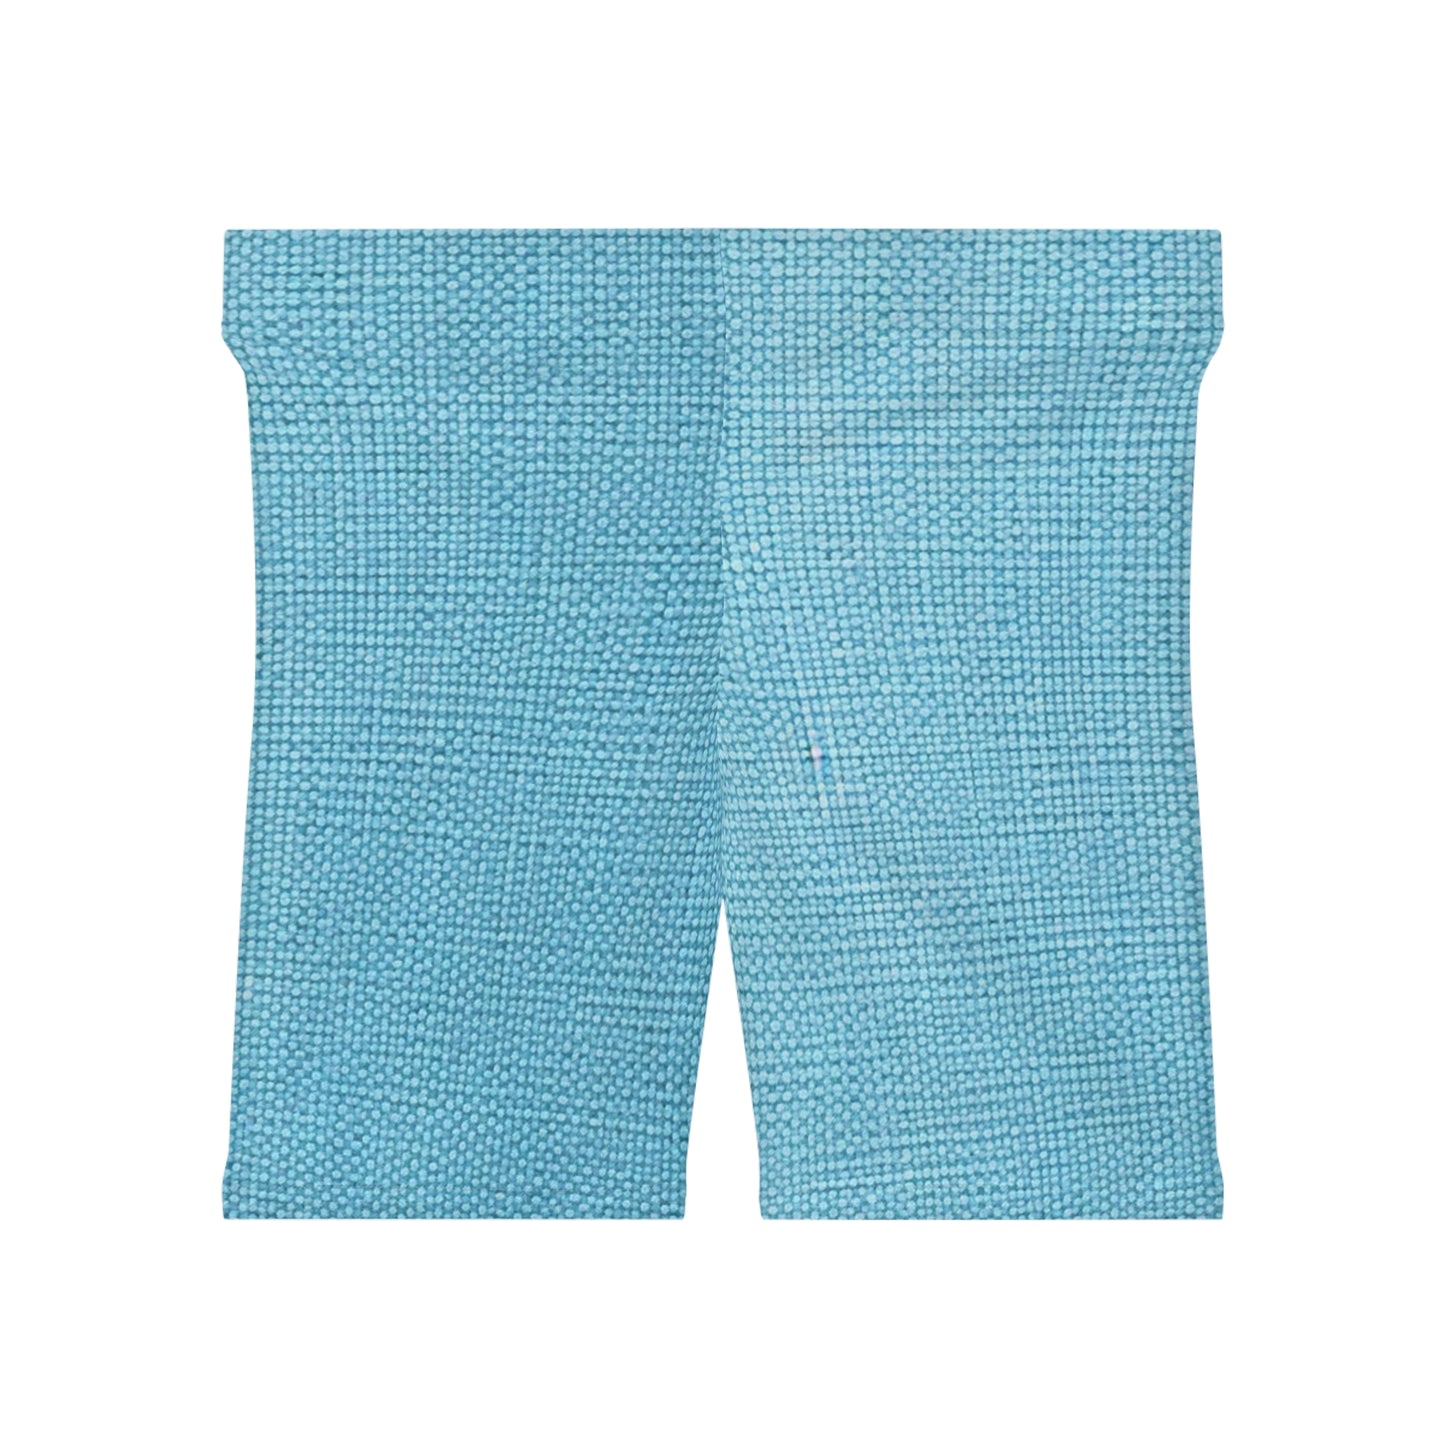 Bright Aqua Teal: Denim-Inspired Refreshing Blue Summer Fabric - Women's Biker Shorts (AOP)